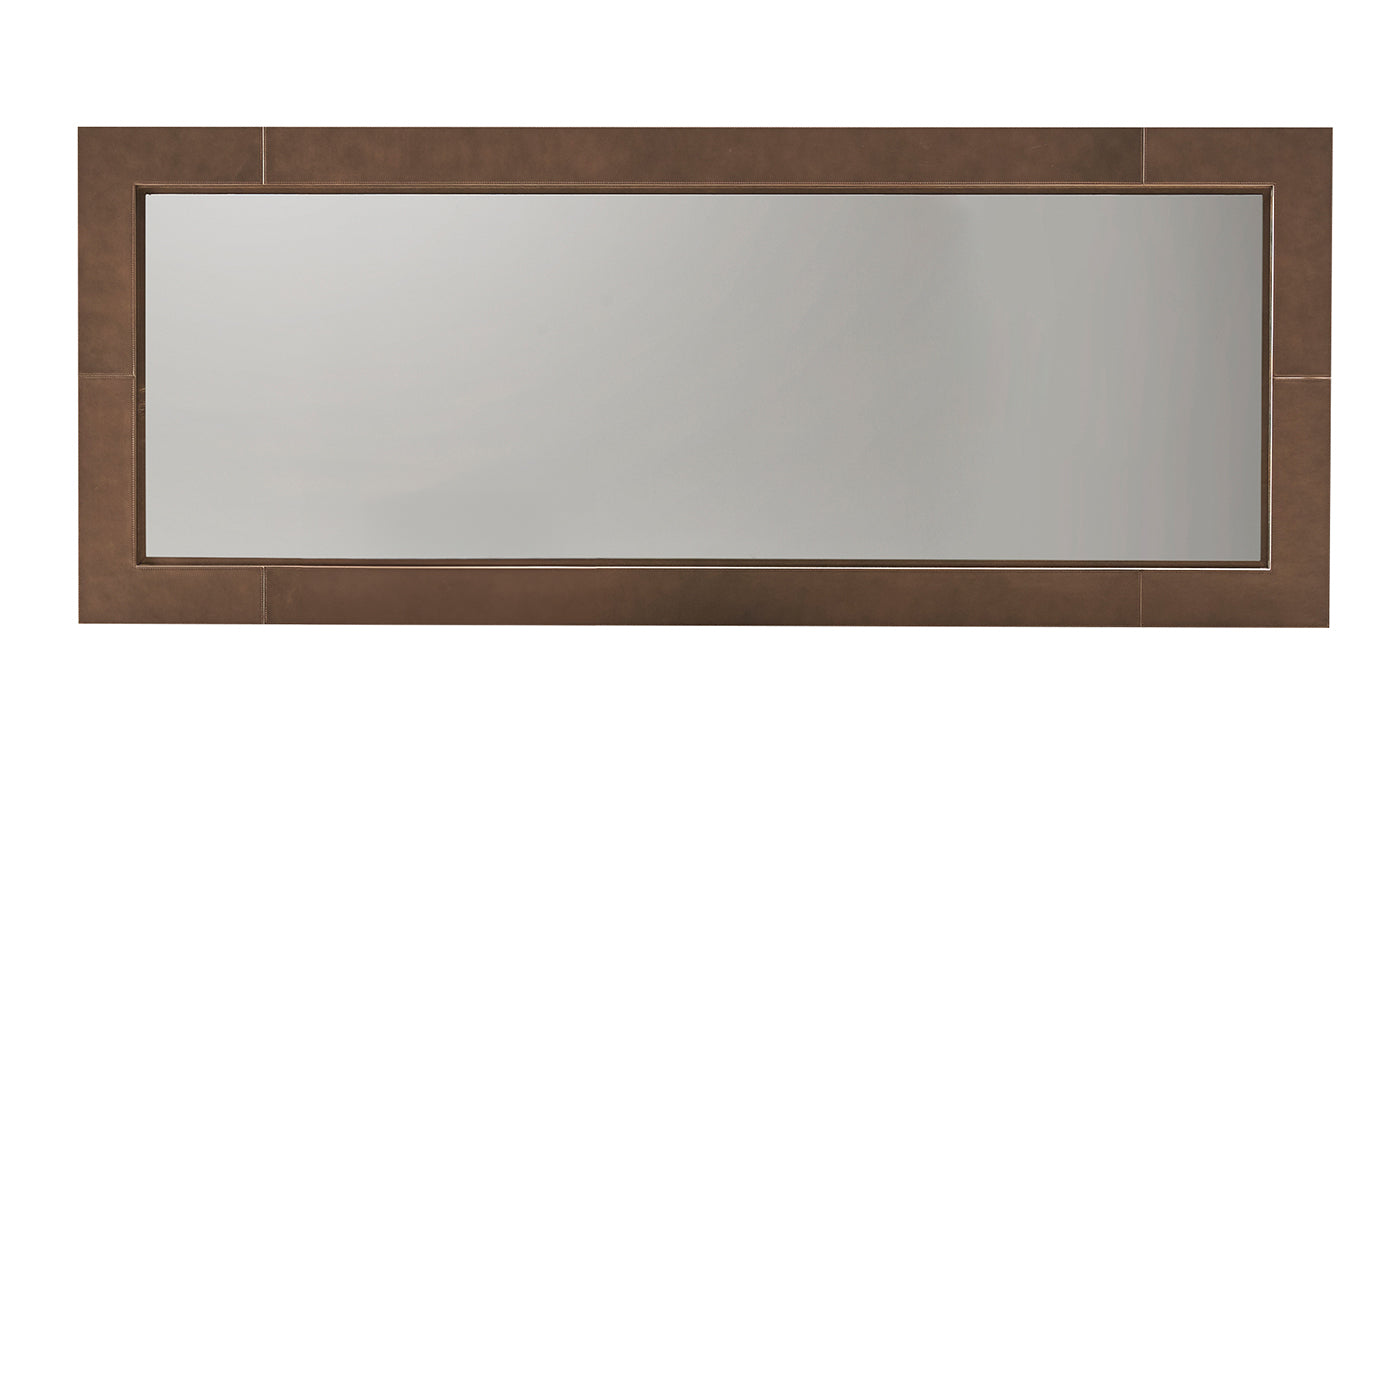 Volterra Miroir rectangulaire en cuir brun - Vue principale